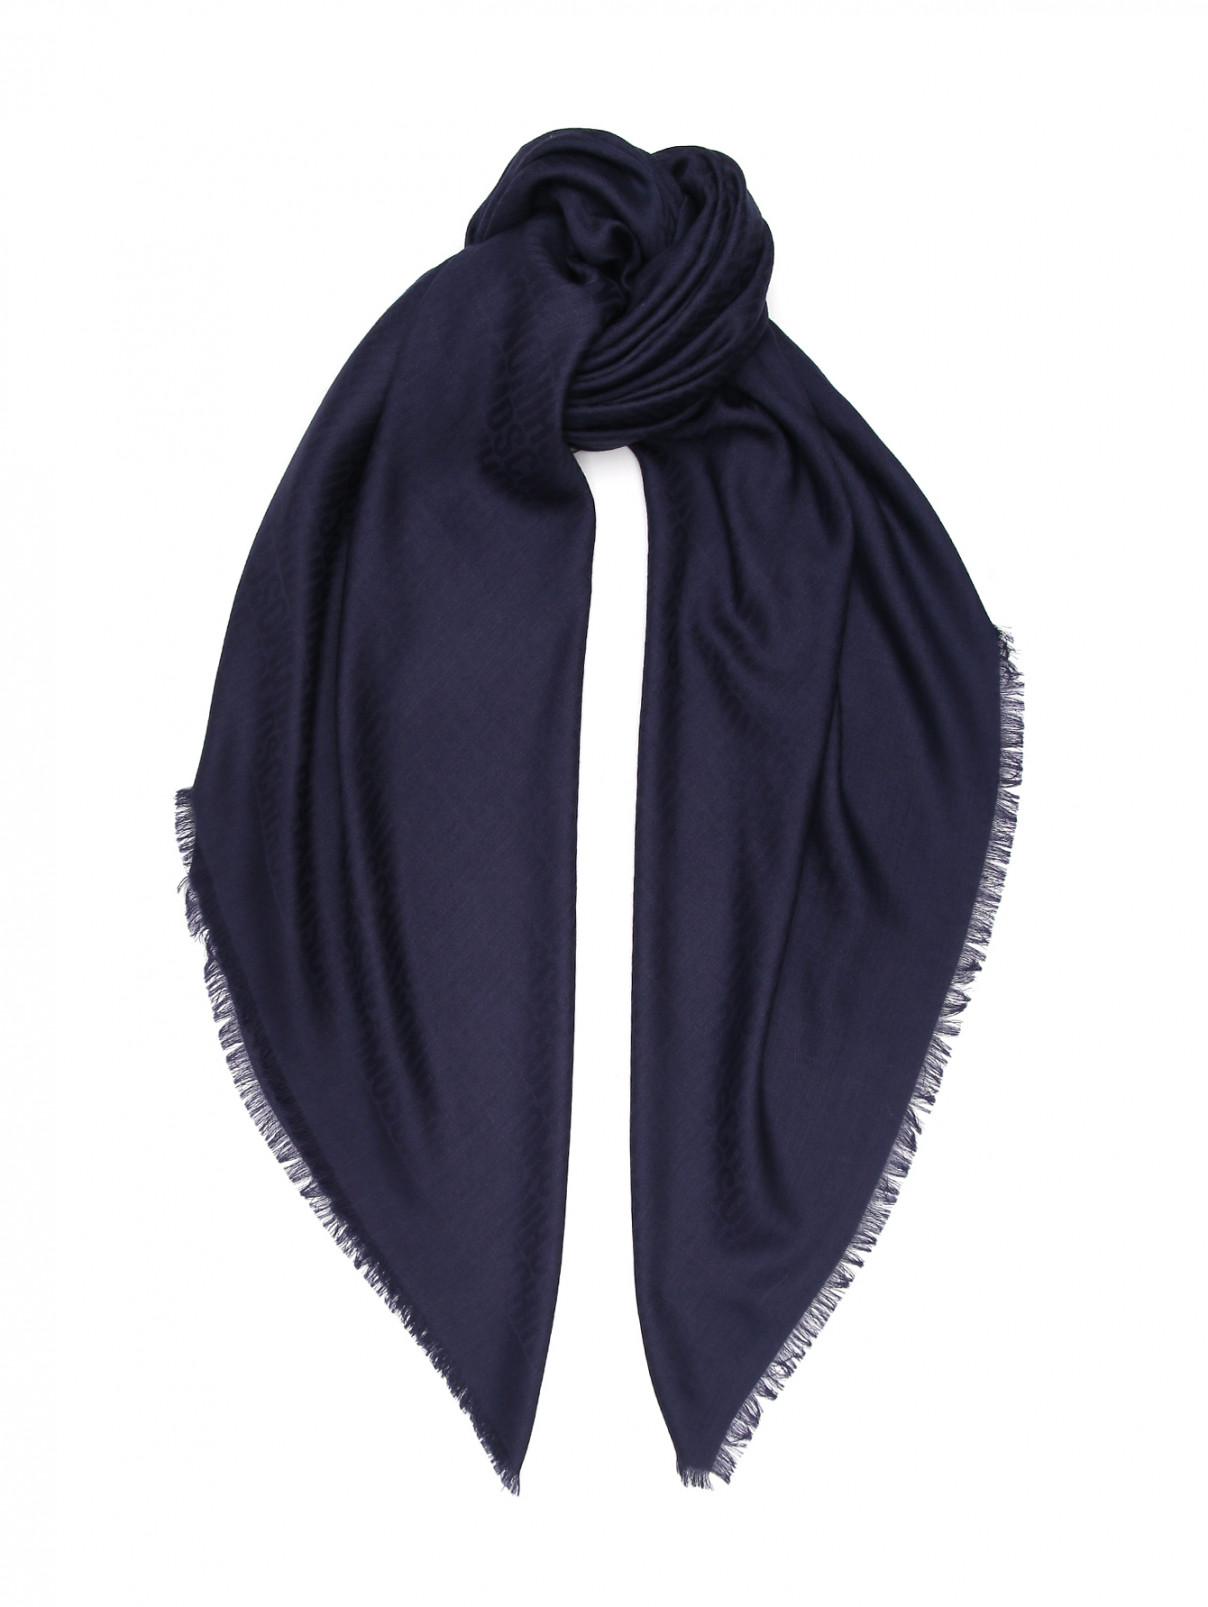 Платок из шерсти и шелка с бахромой Moschino  –  Общий вид  – Цвет:  Синий